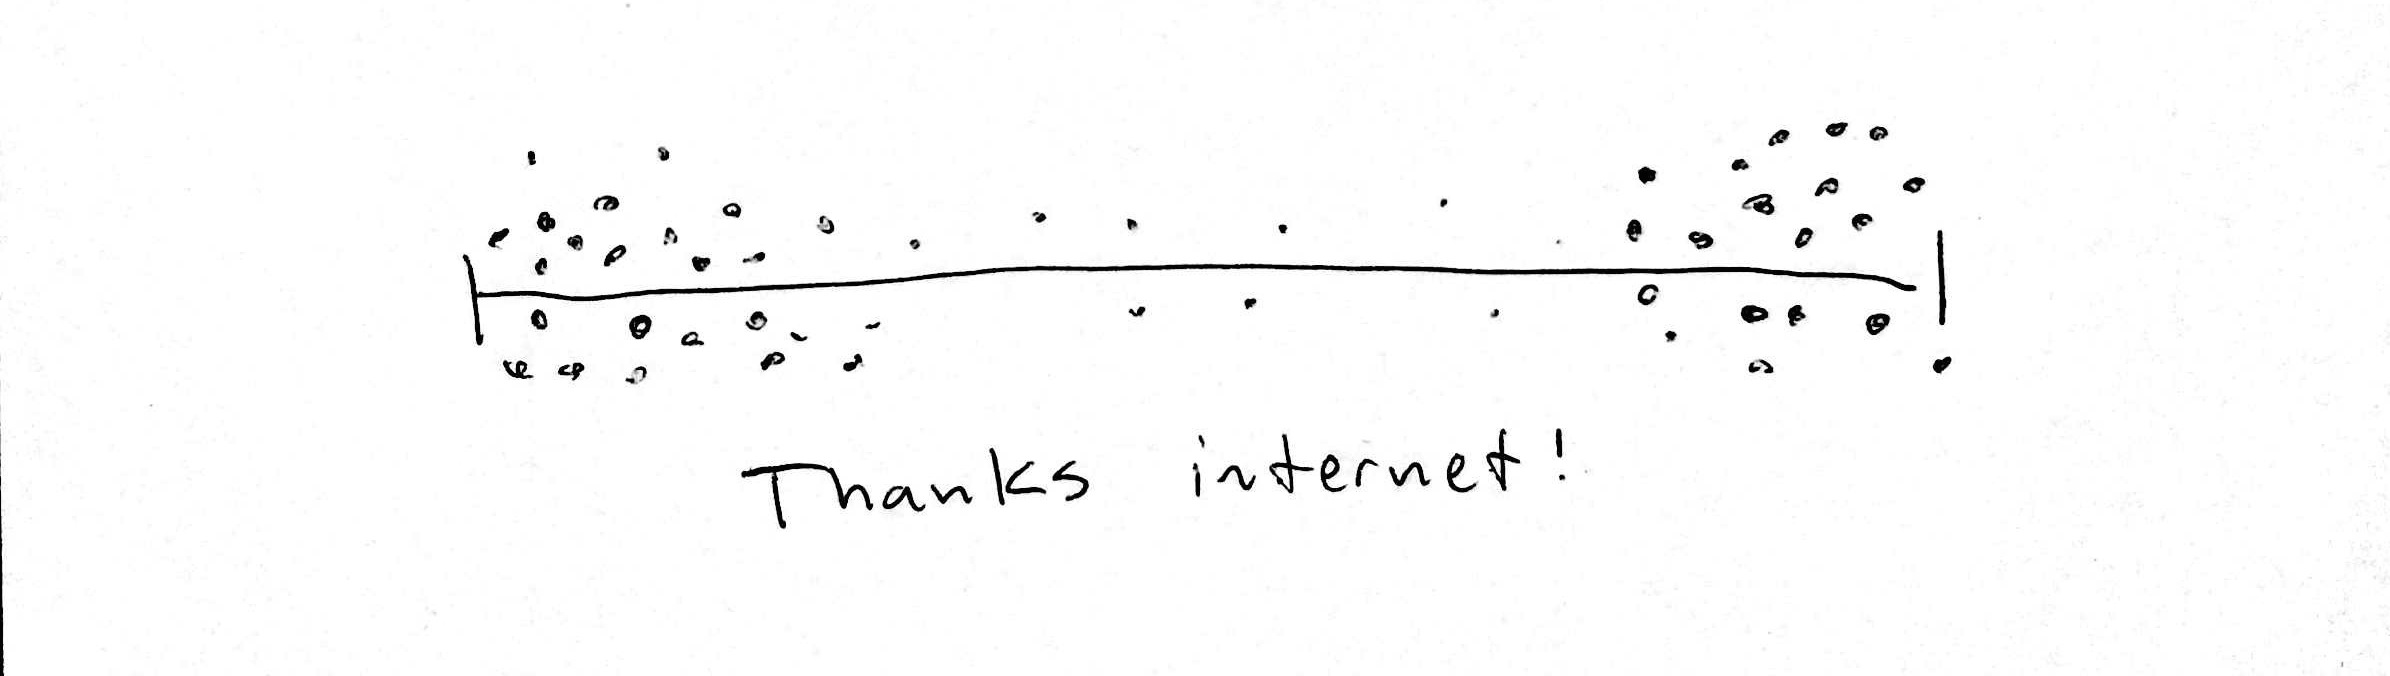 where_people_sit_because_internet.jpeg